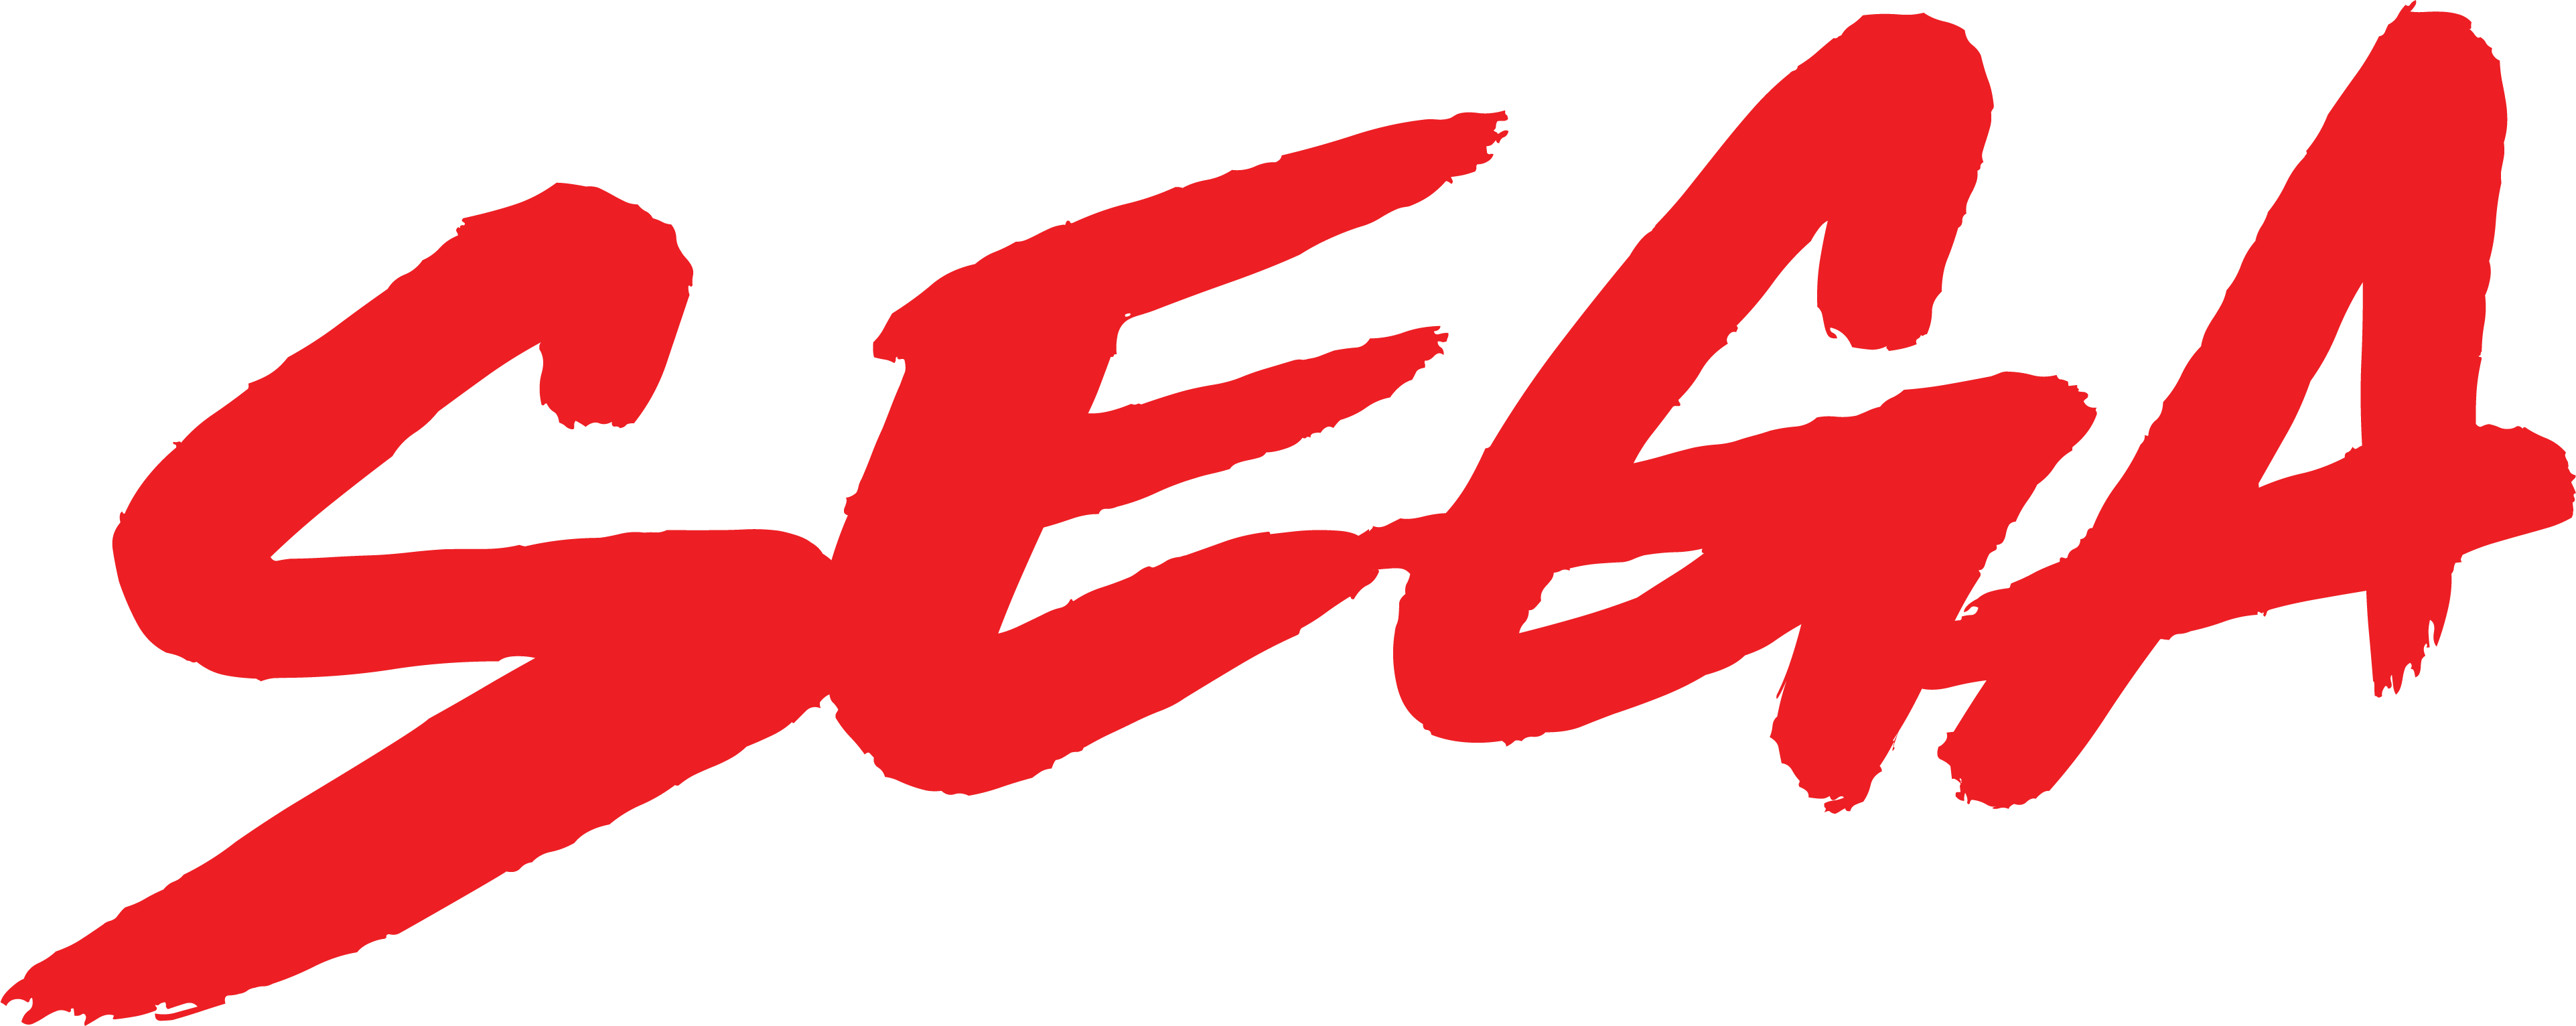 Sega Genecide Logo - Red:White